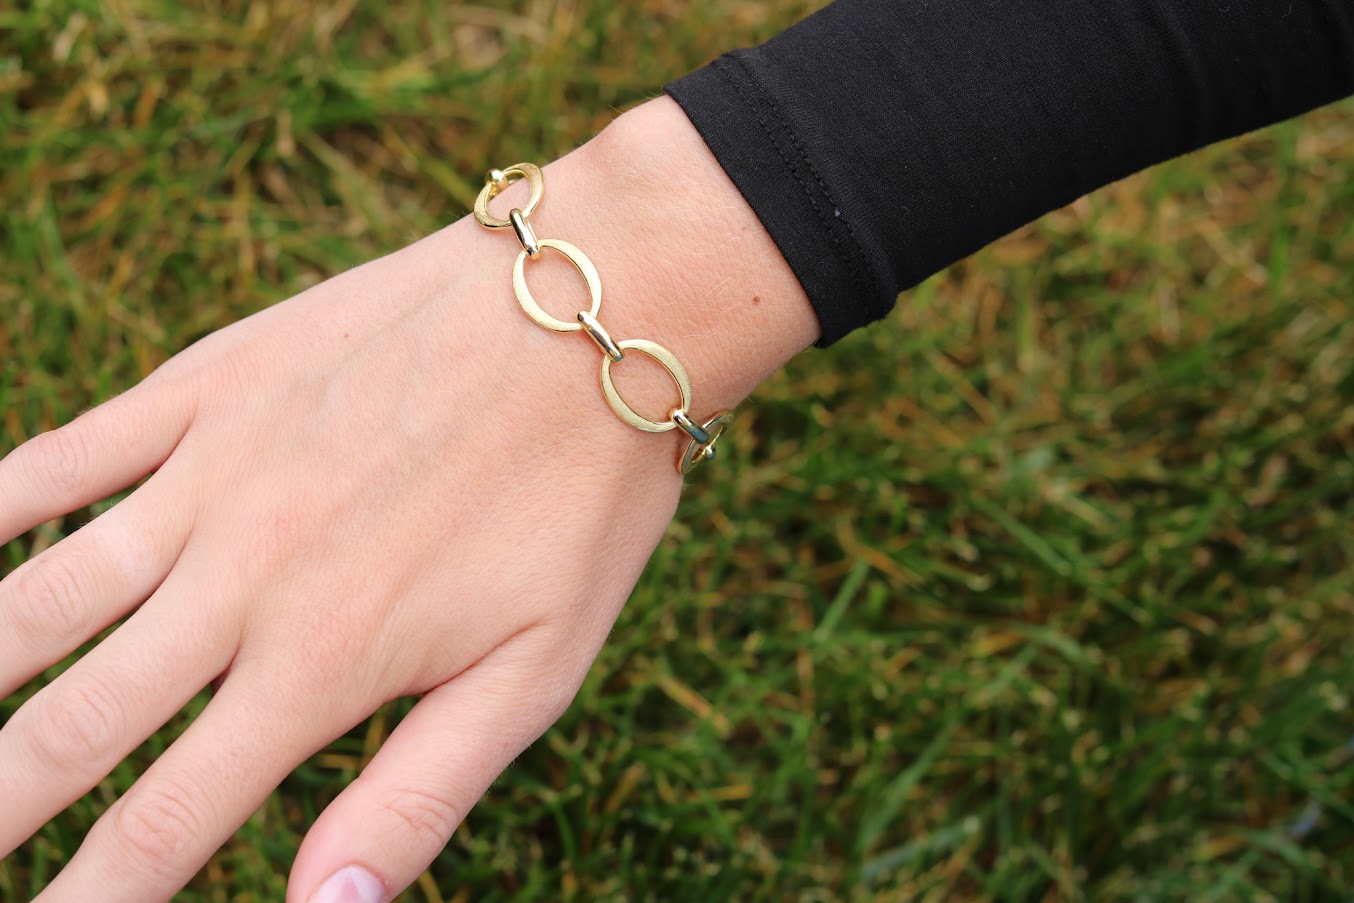 Oval Gold Link Bracelet